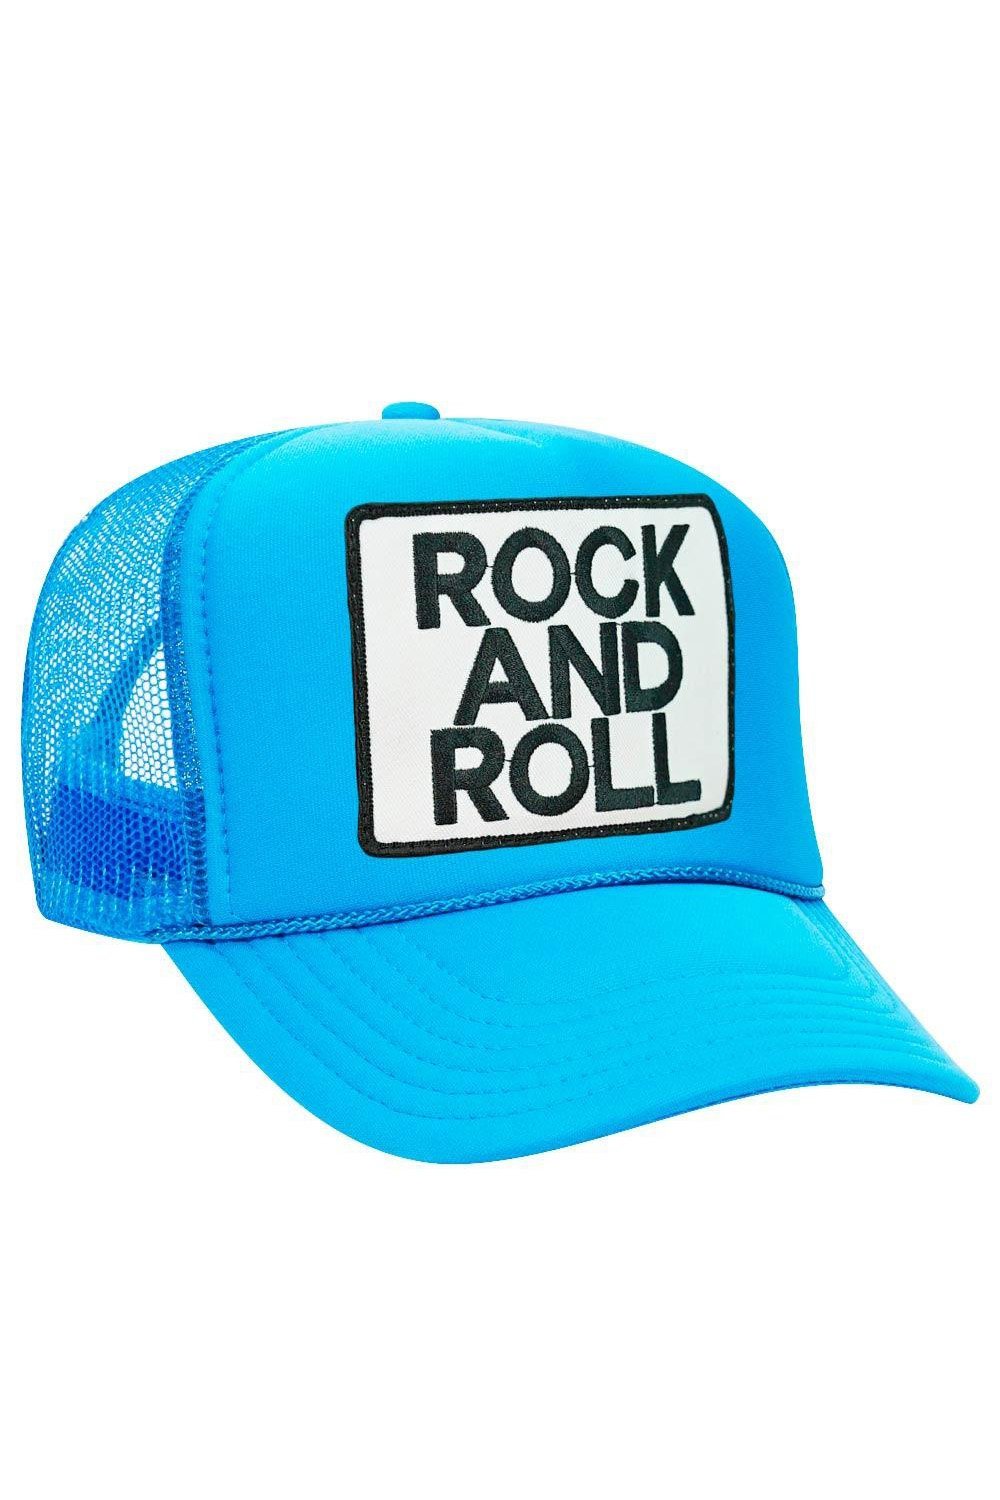 ROCK &amp; ROLL VINTAGE TRUCKER HAT HATS Aviator Nation OS NEON BLUE 